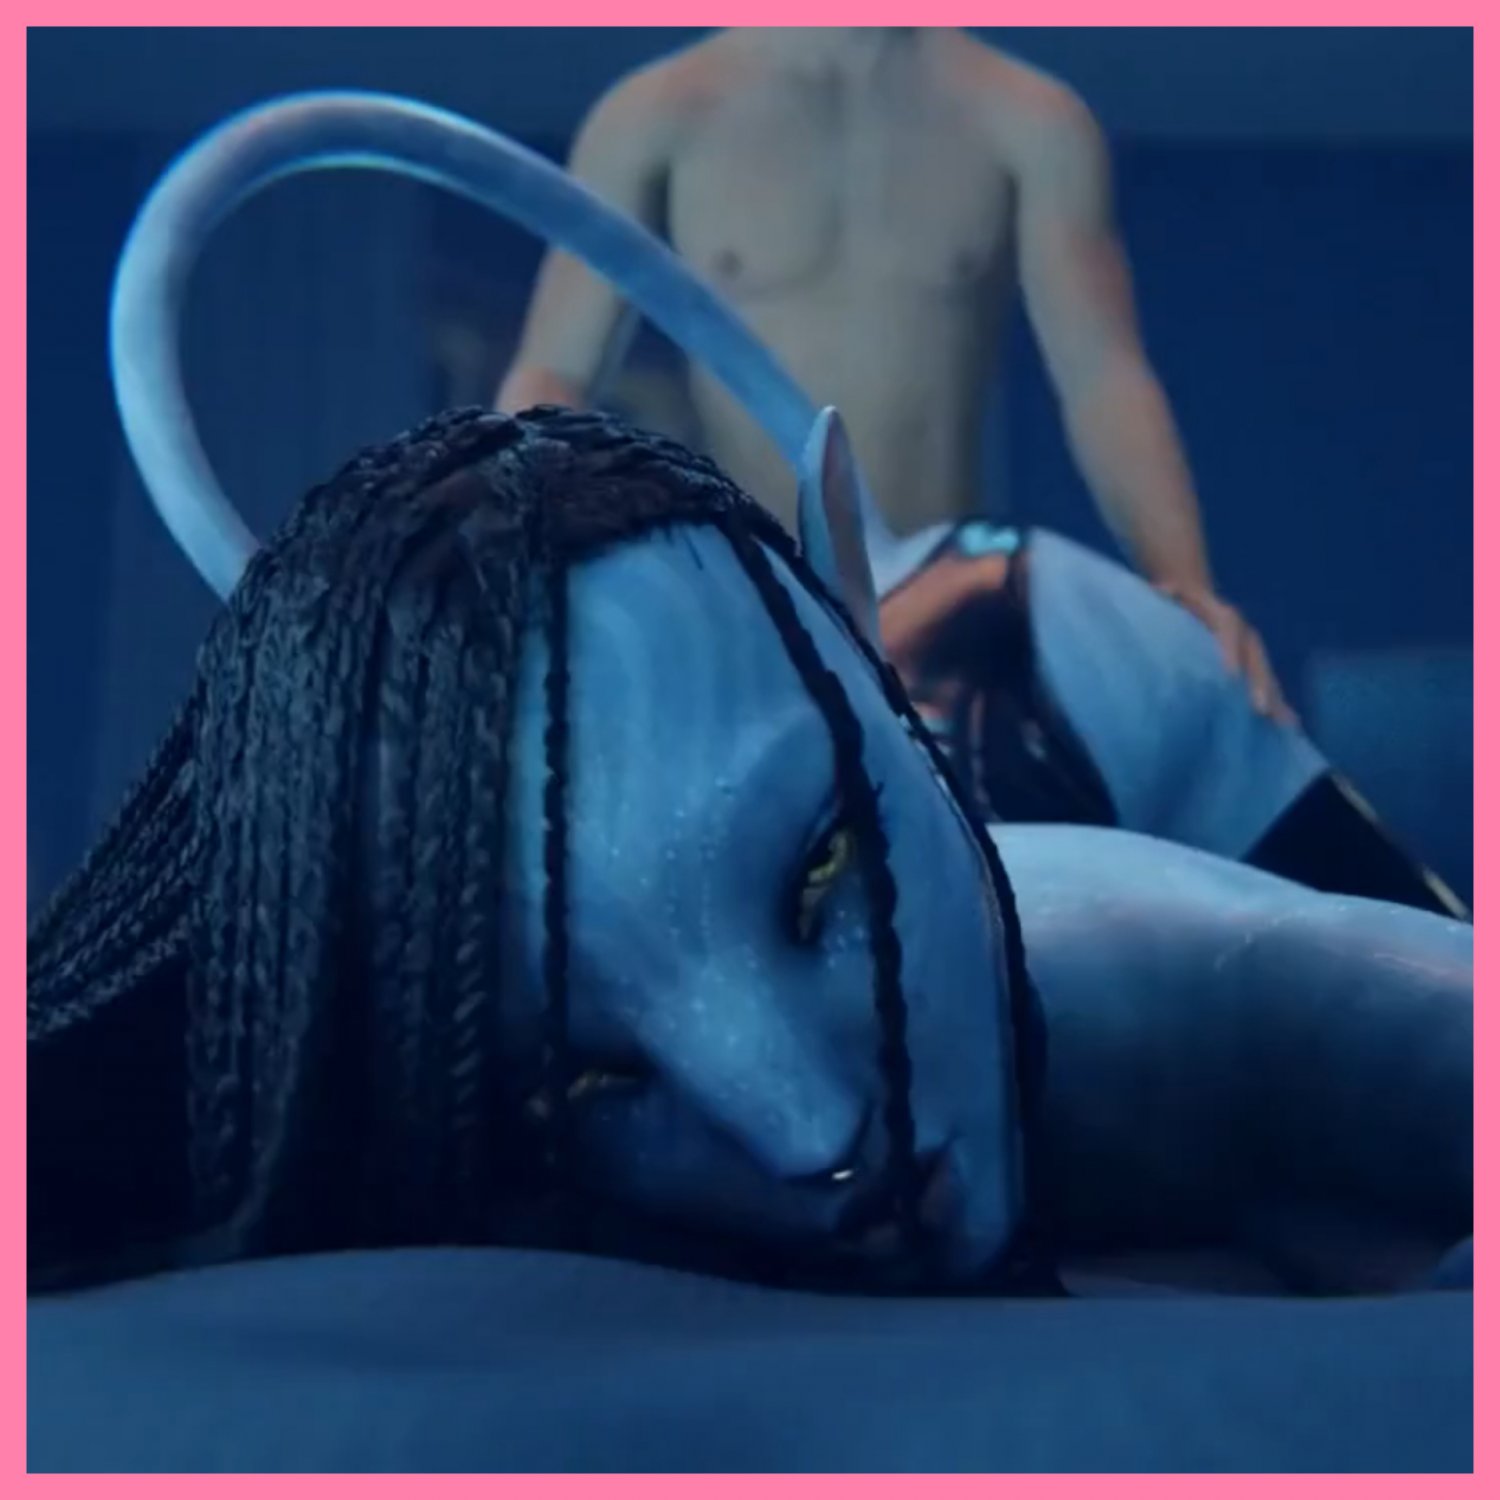 Avater Porn - Avatar 3: Trailer - Porn Videos & Photos - EroMe